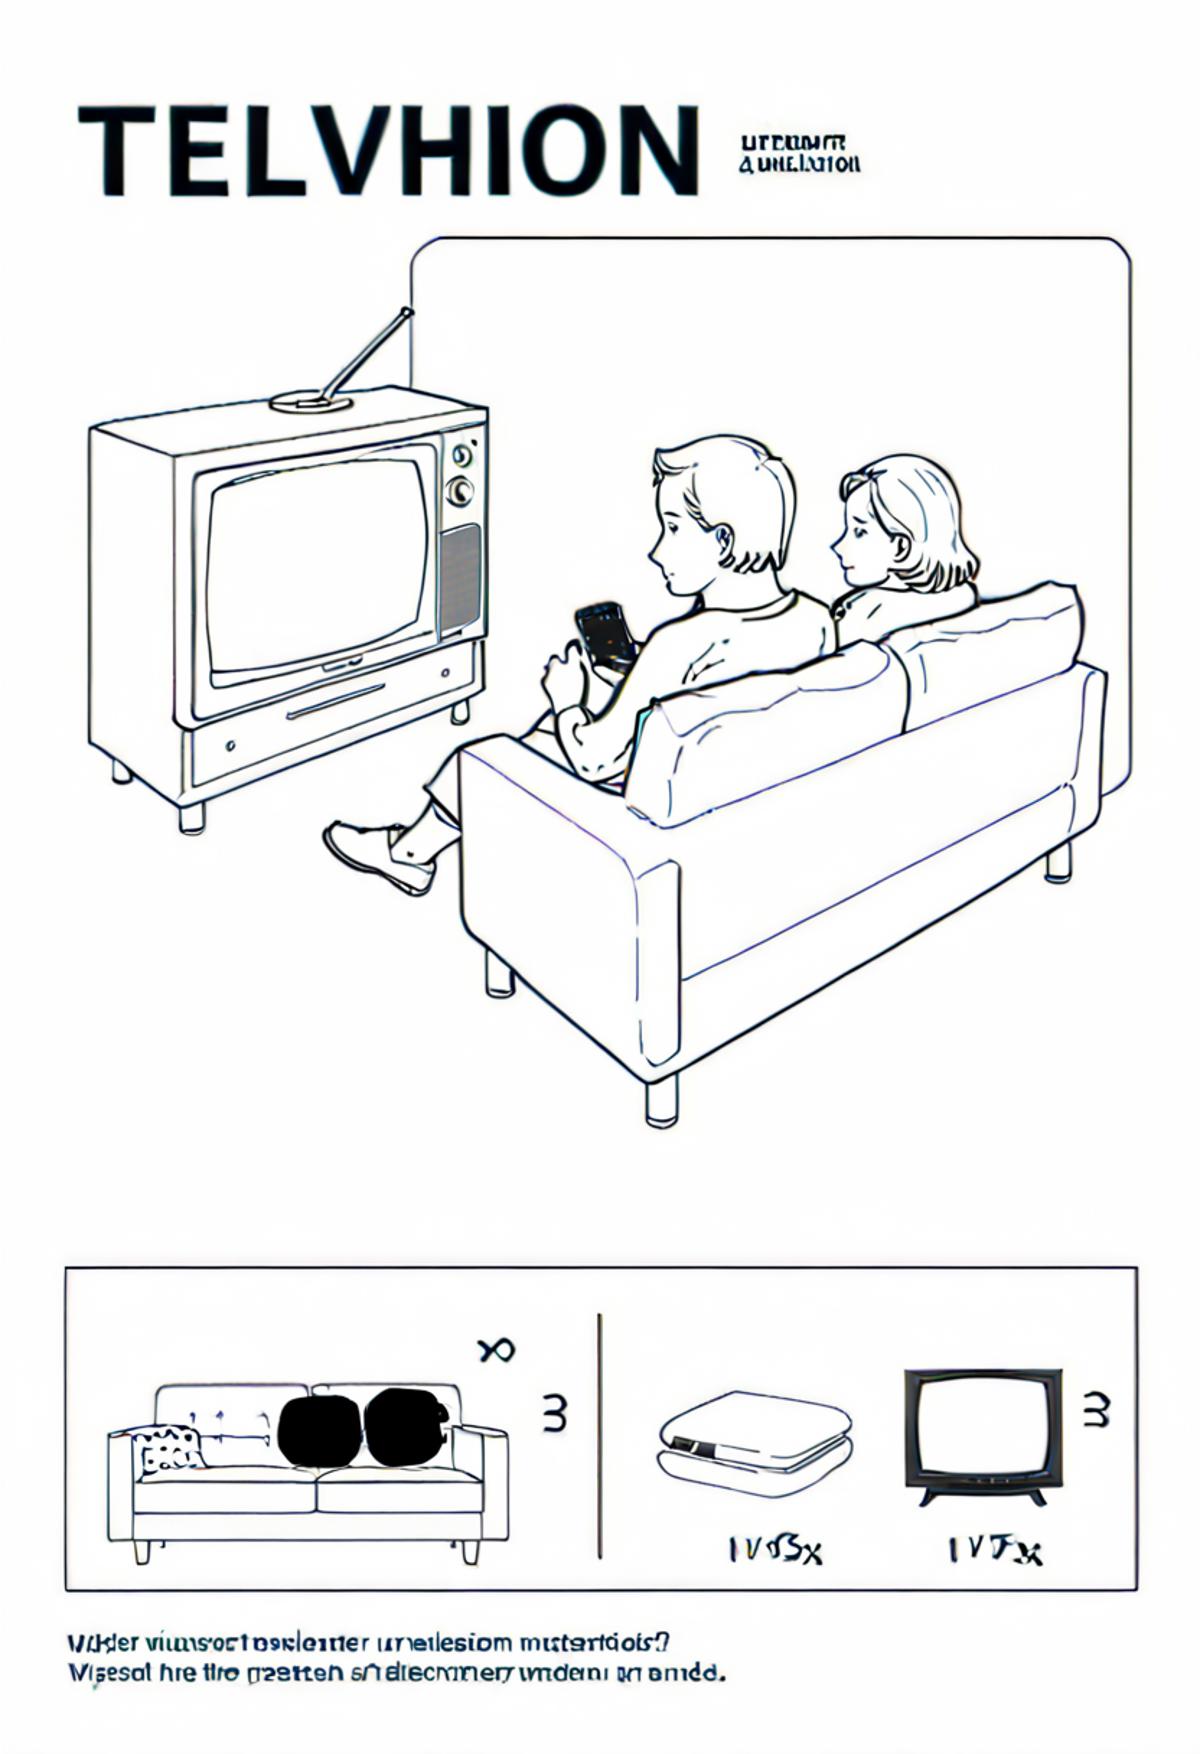 Ikea Instructions - LoRA - SDXL image by Zeru